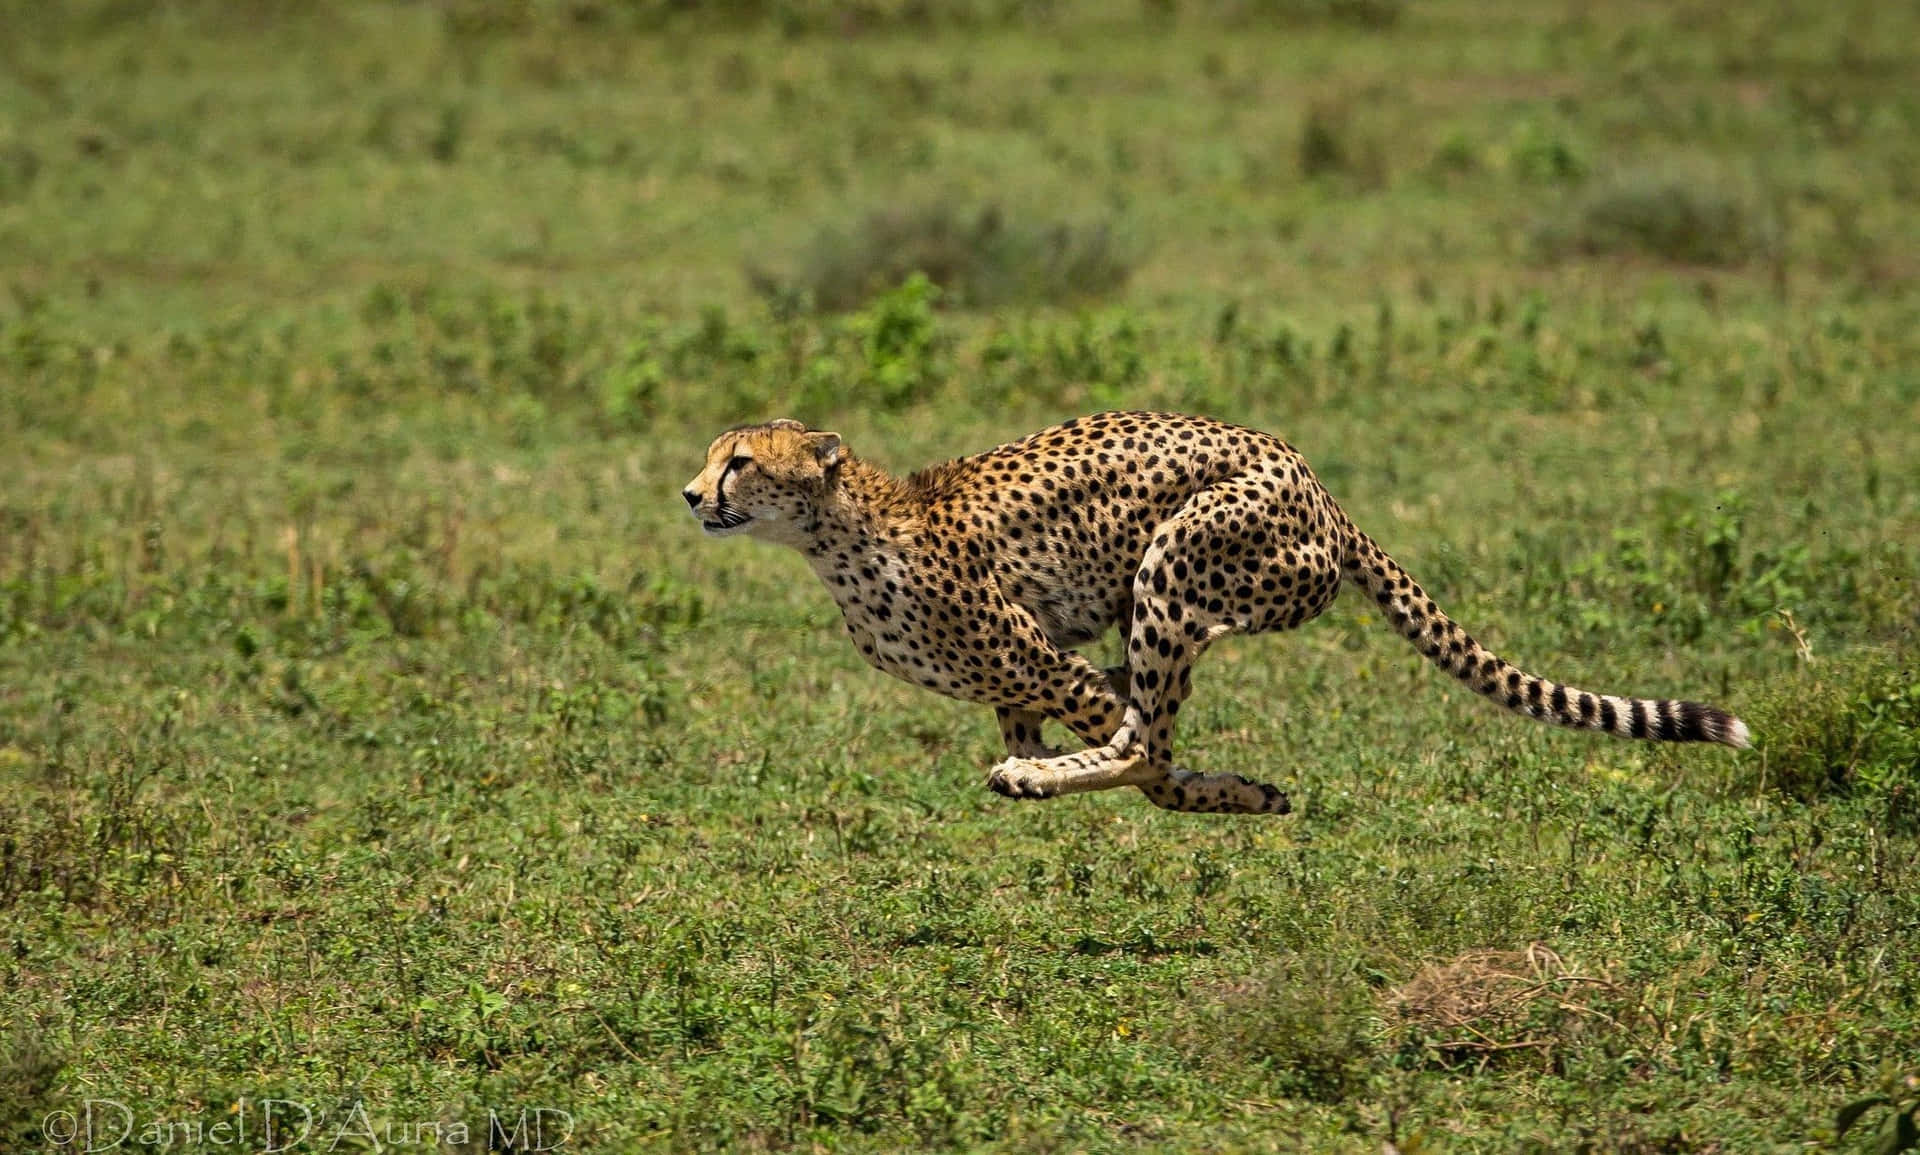 An HD image of a cheetah running in its natural habitat. Wallpaper